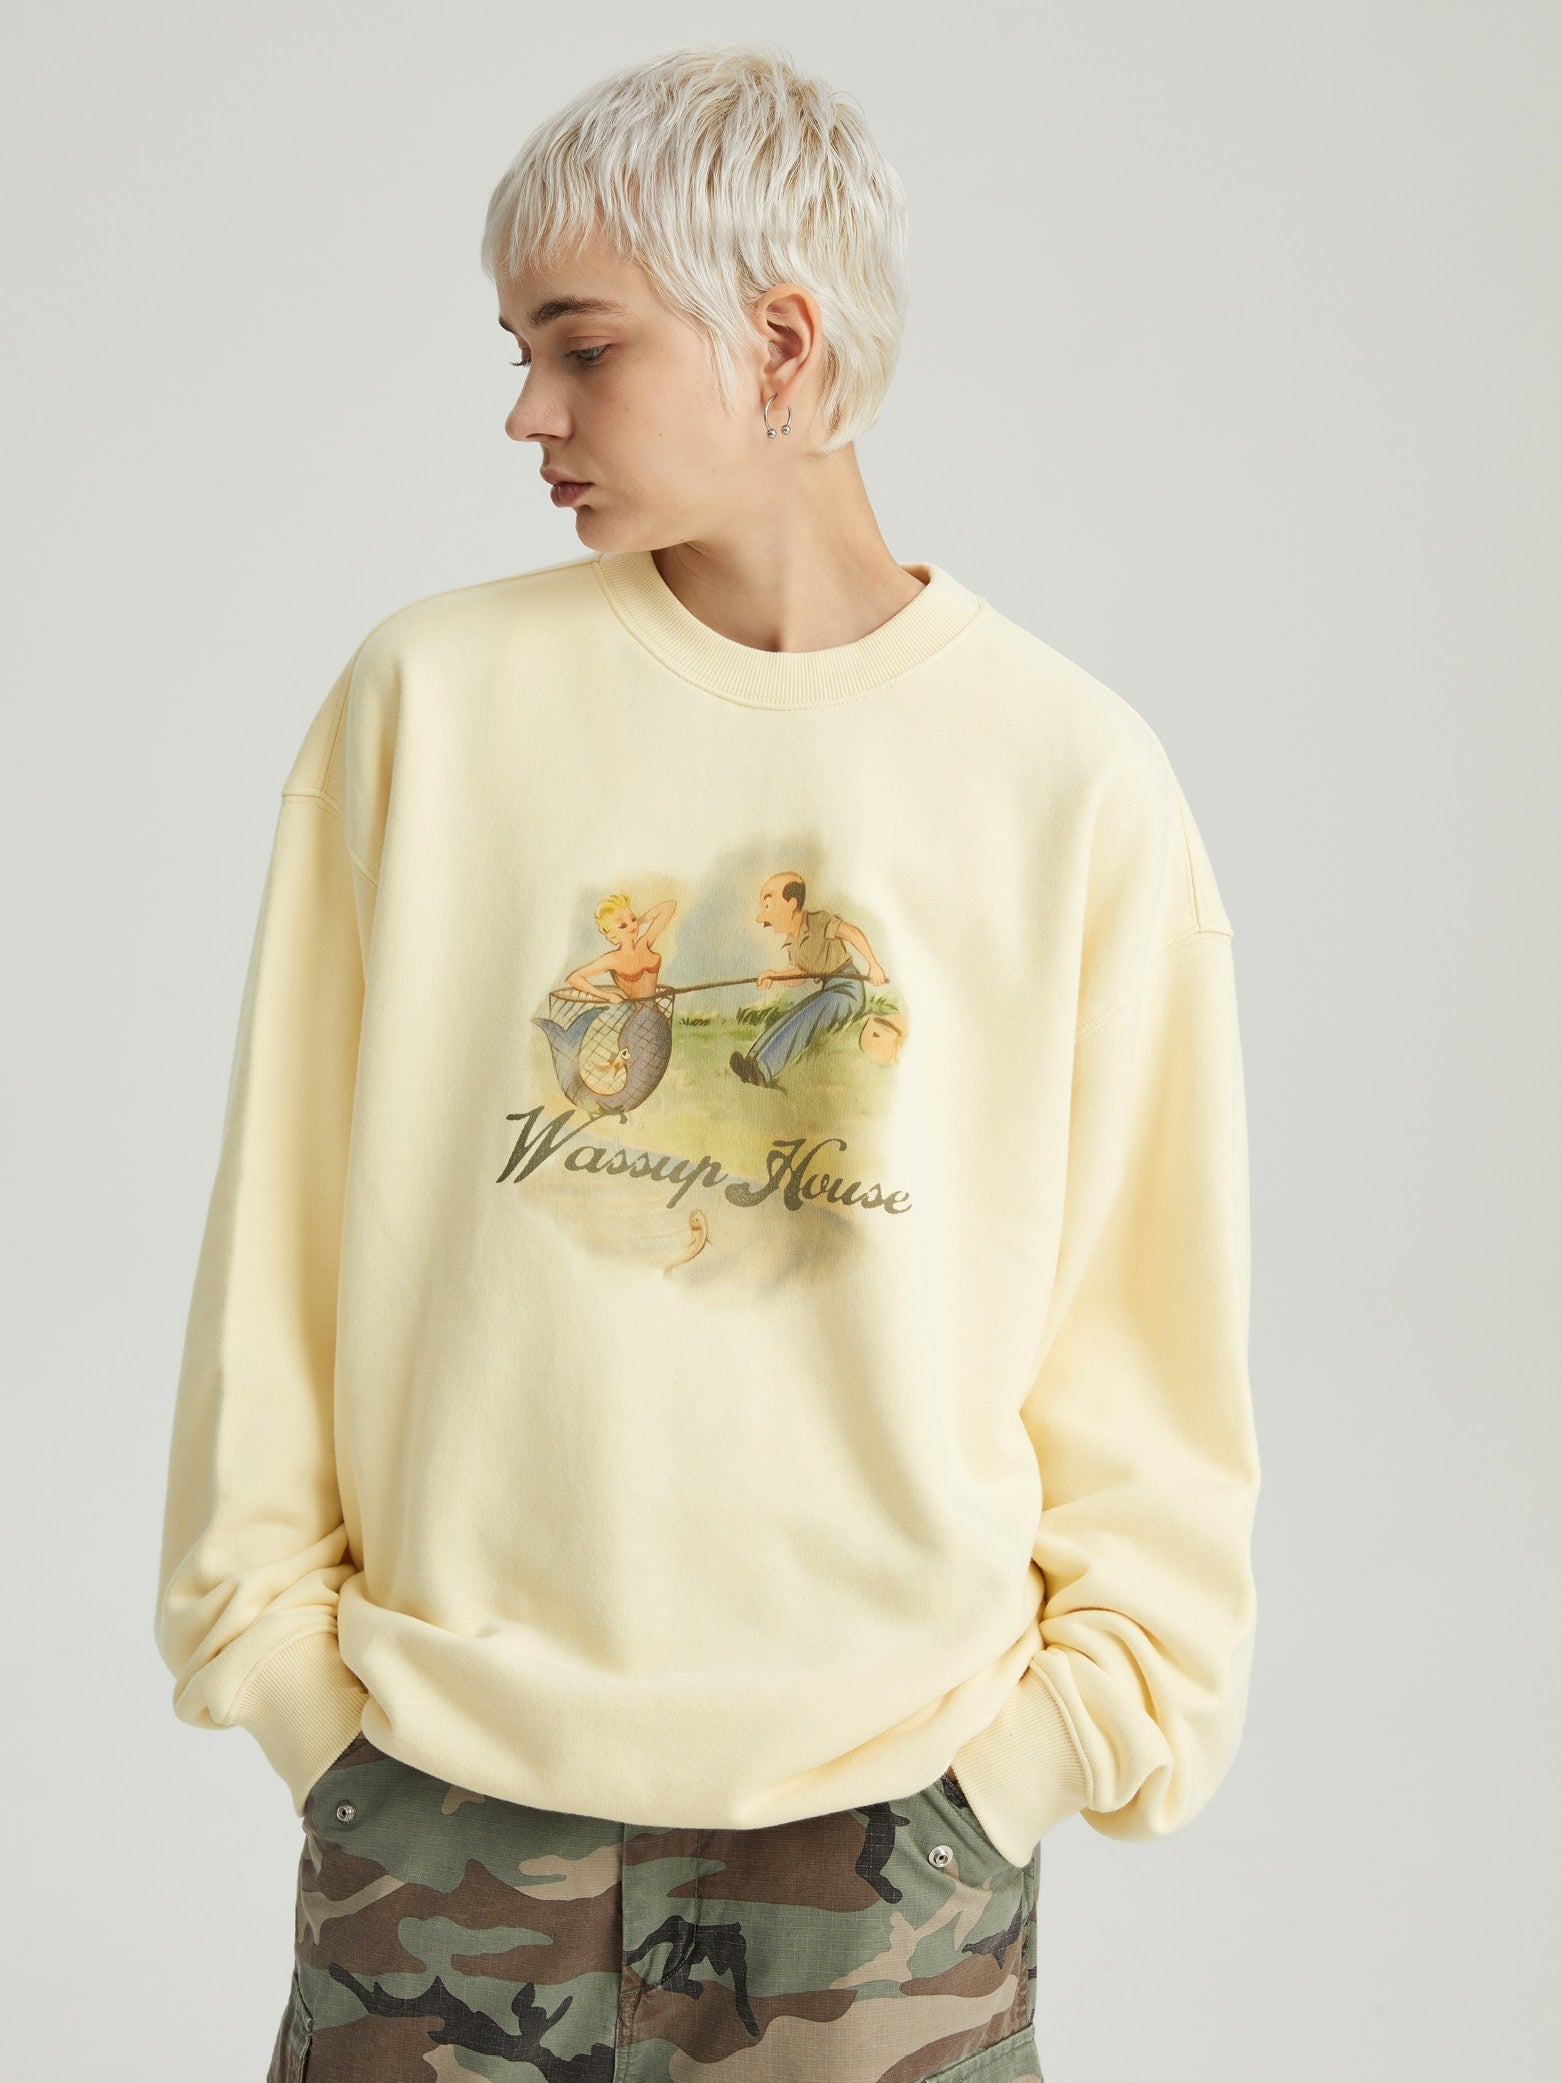 Whimsical Mermaid Tale Printed Sweatshirt - chiclara